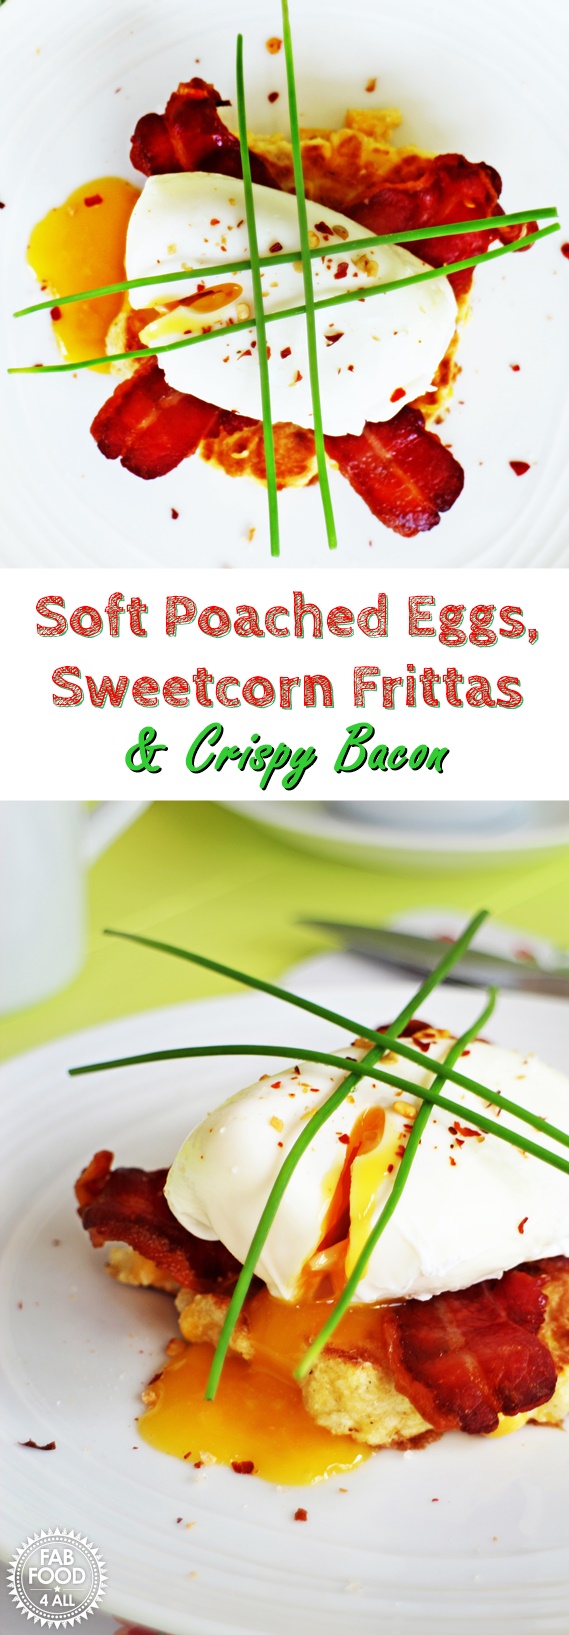 Soft Poached Eggs, Sweetcorn Frittas and Crispy Bacon @FabFood4All #eggs #britisheggweek